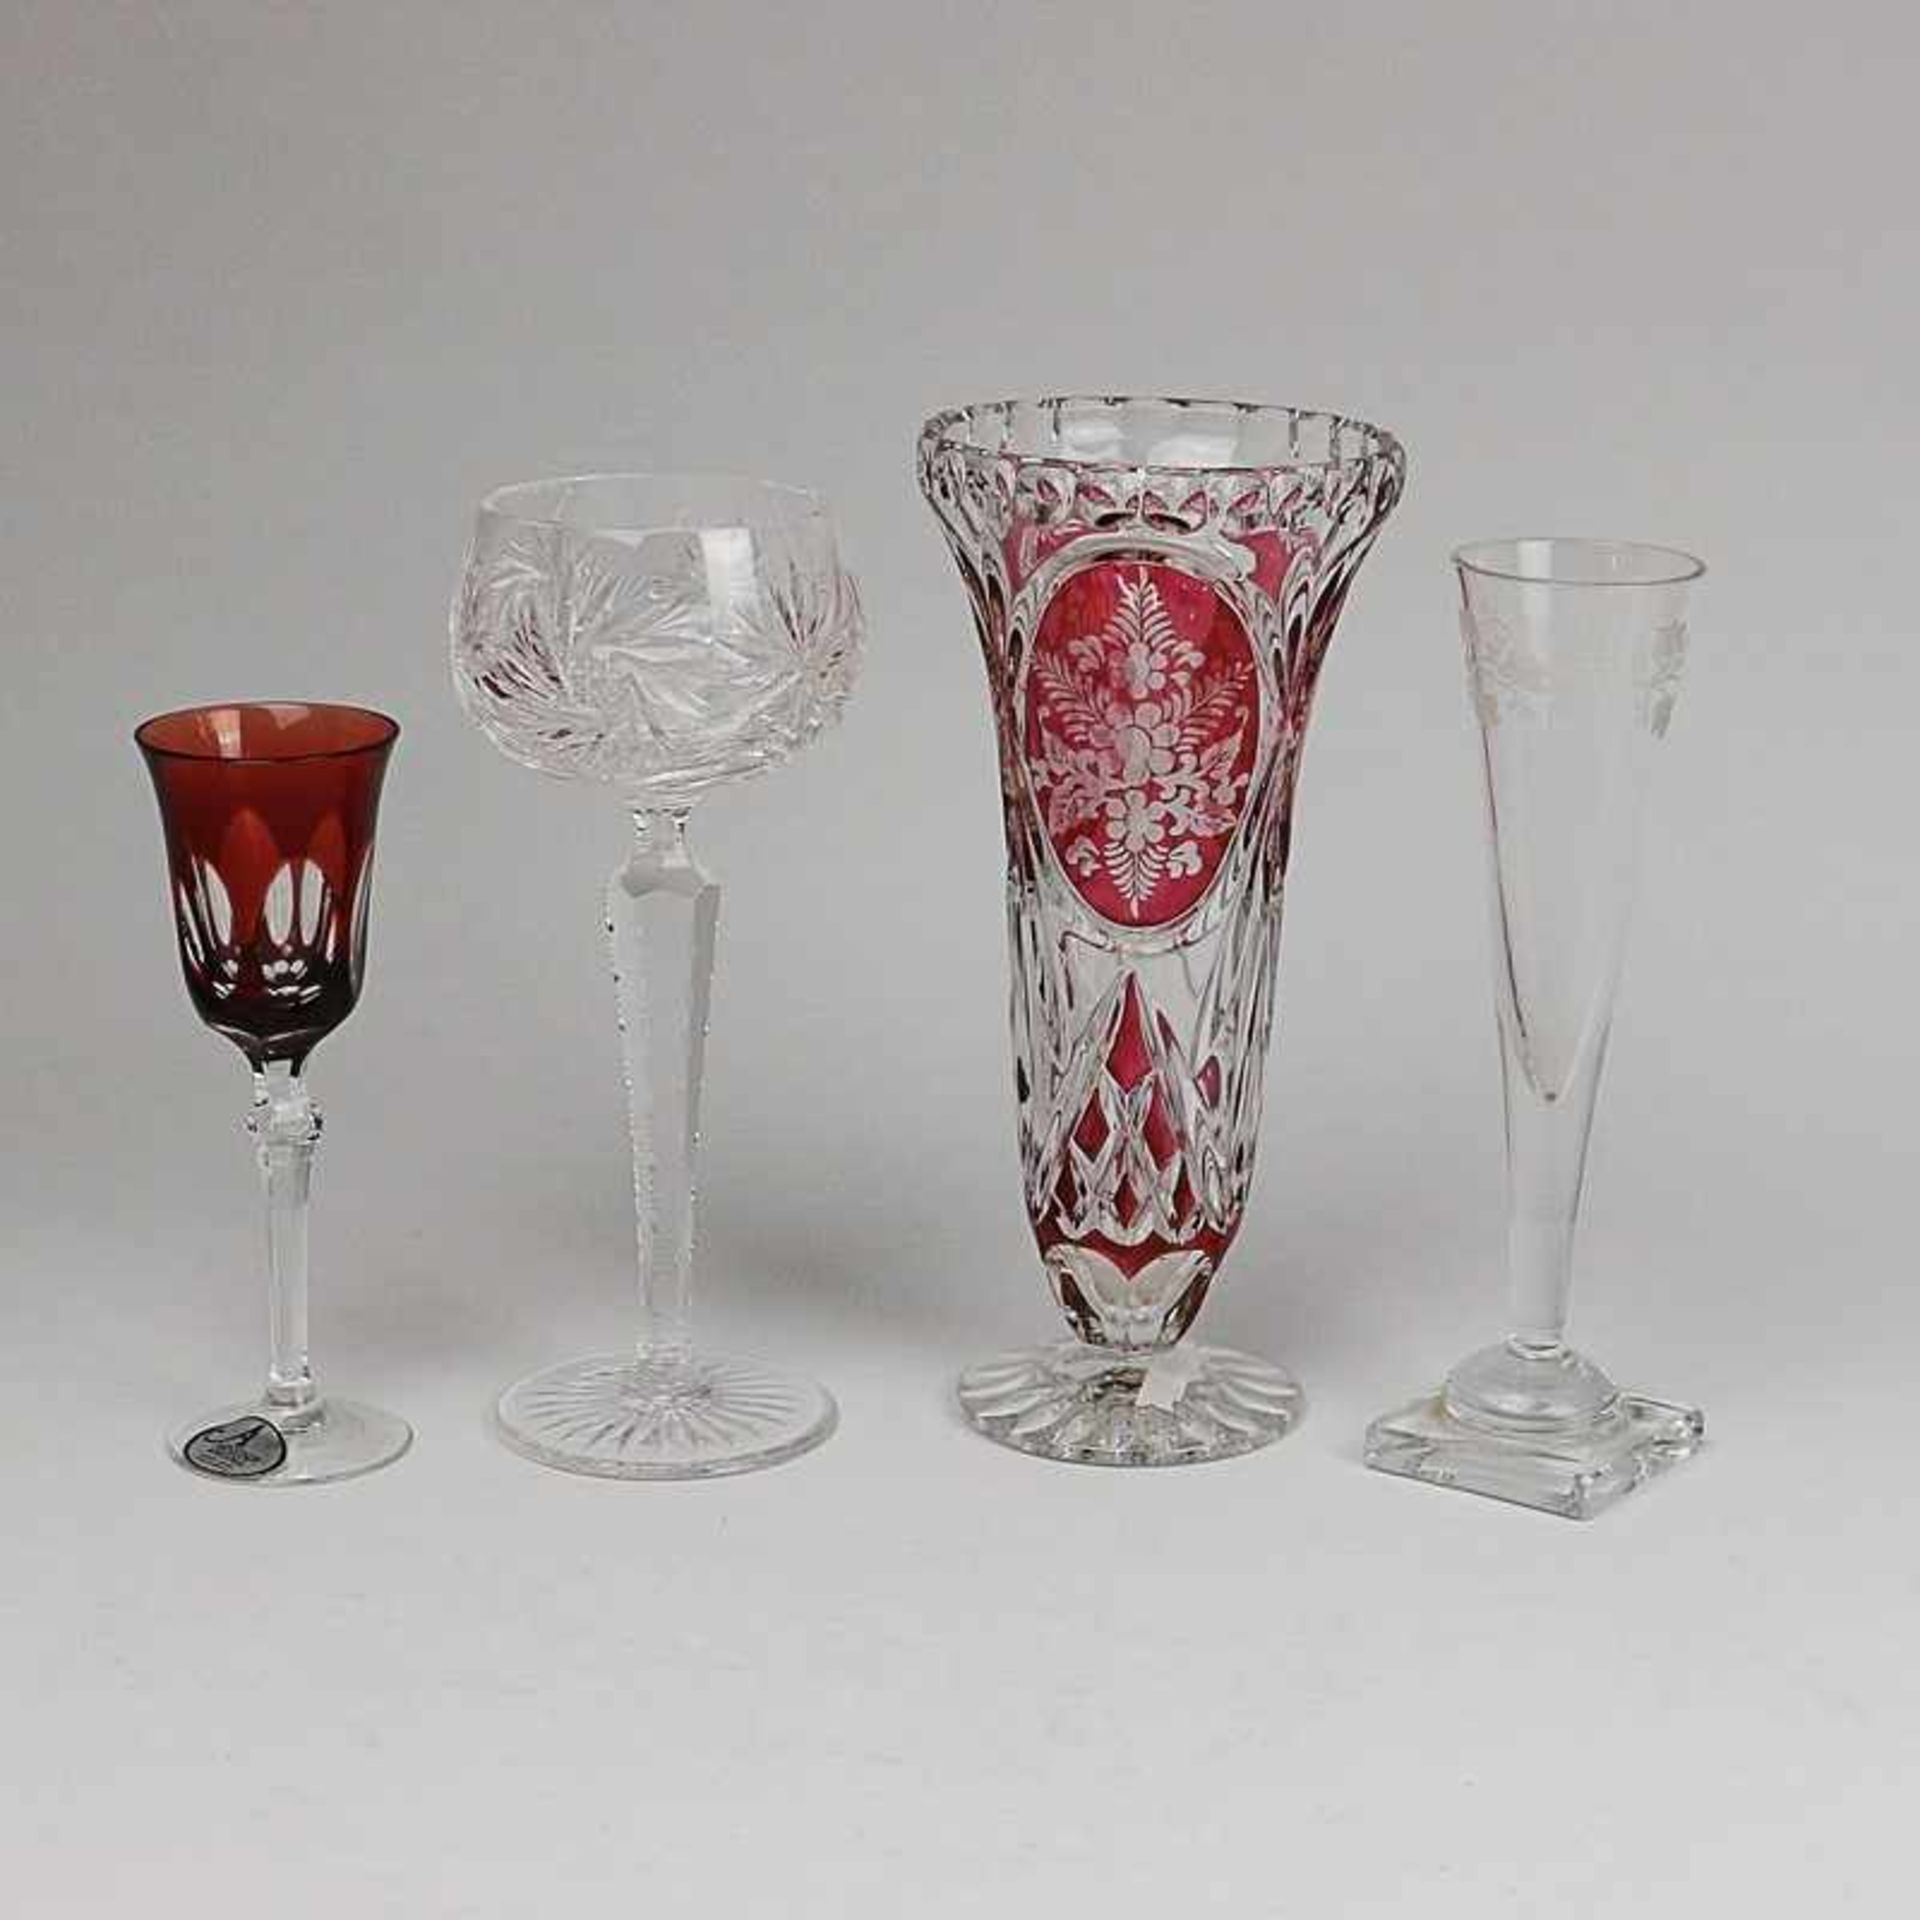 Konvolut 4 St., Likörglas, Römer, Vasen, untersch. Formen u. Größen, farbloses Glas, 2x rotfarben